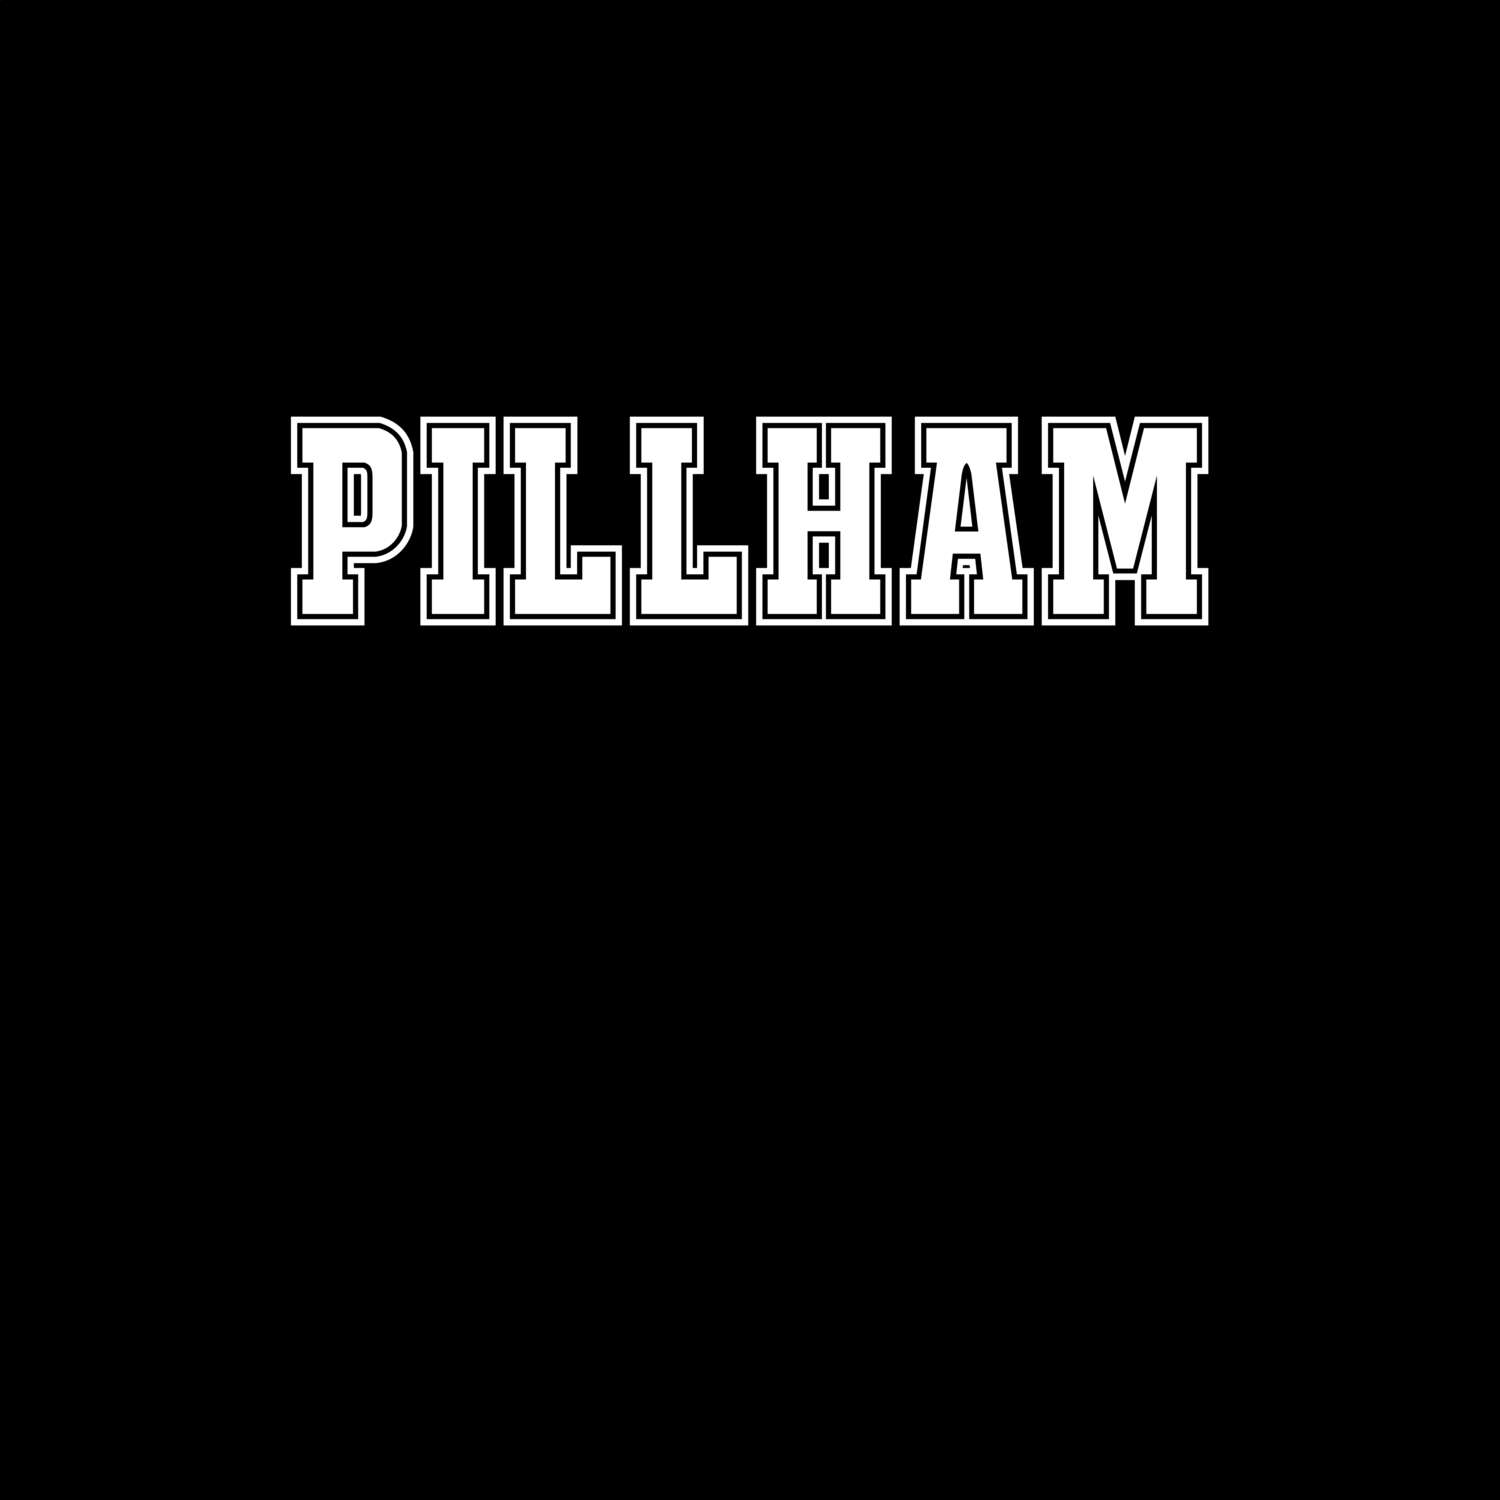 Pillham T-Shirt »Classic«